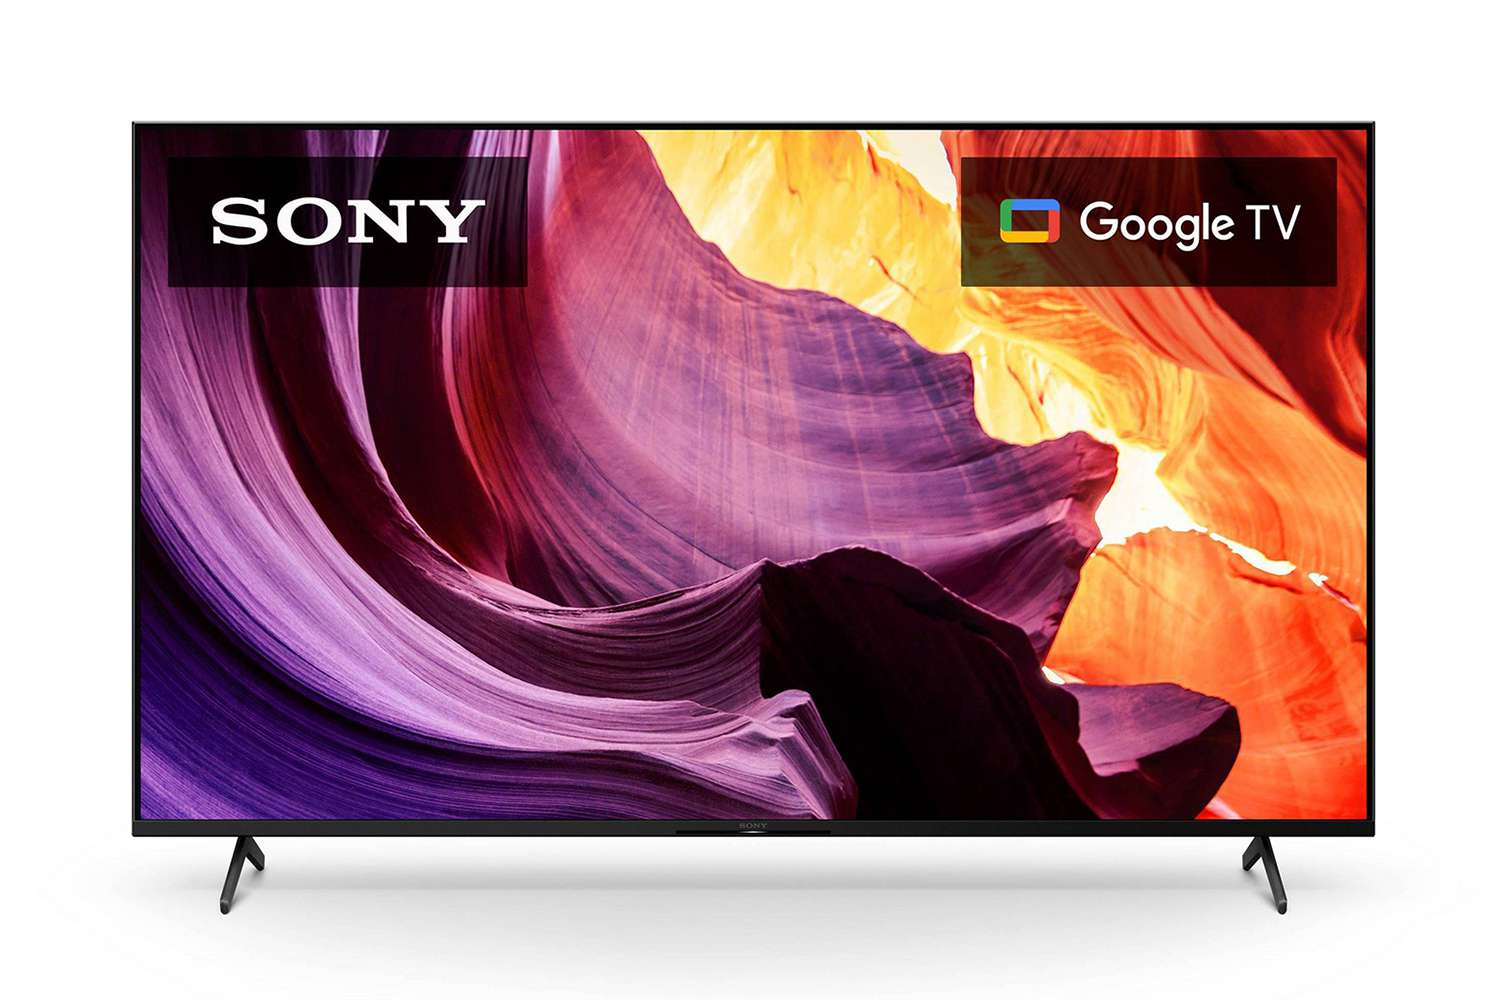 Sony 55" Class X80K Series 4K HDR LED with smart Google TV- KD55X80K